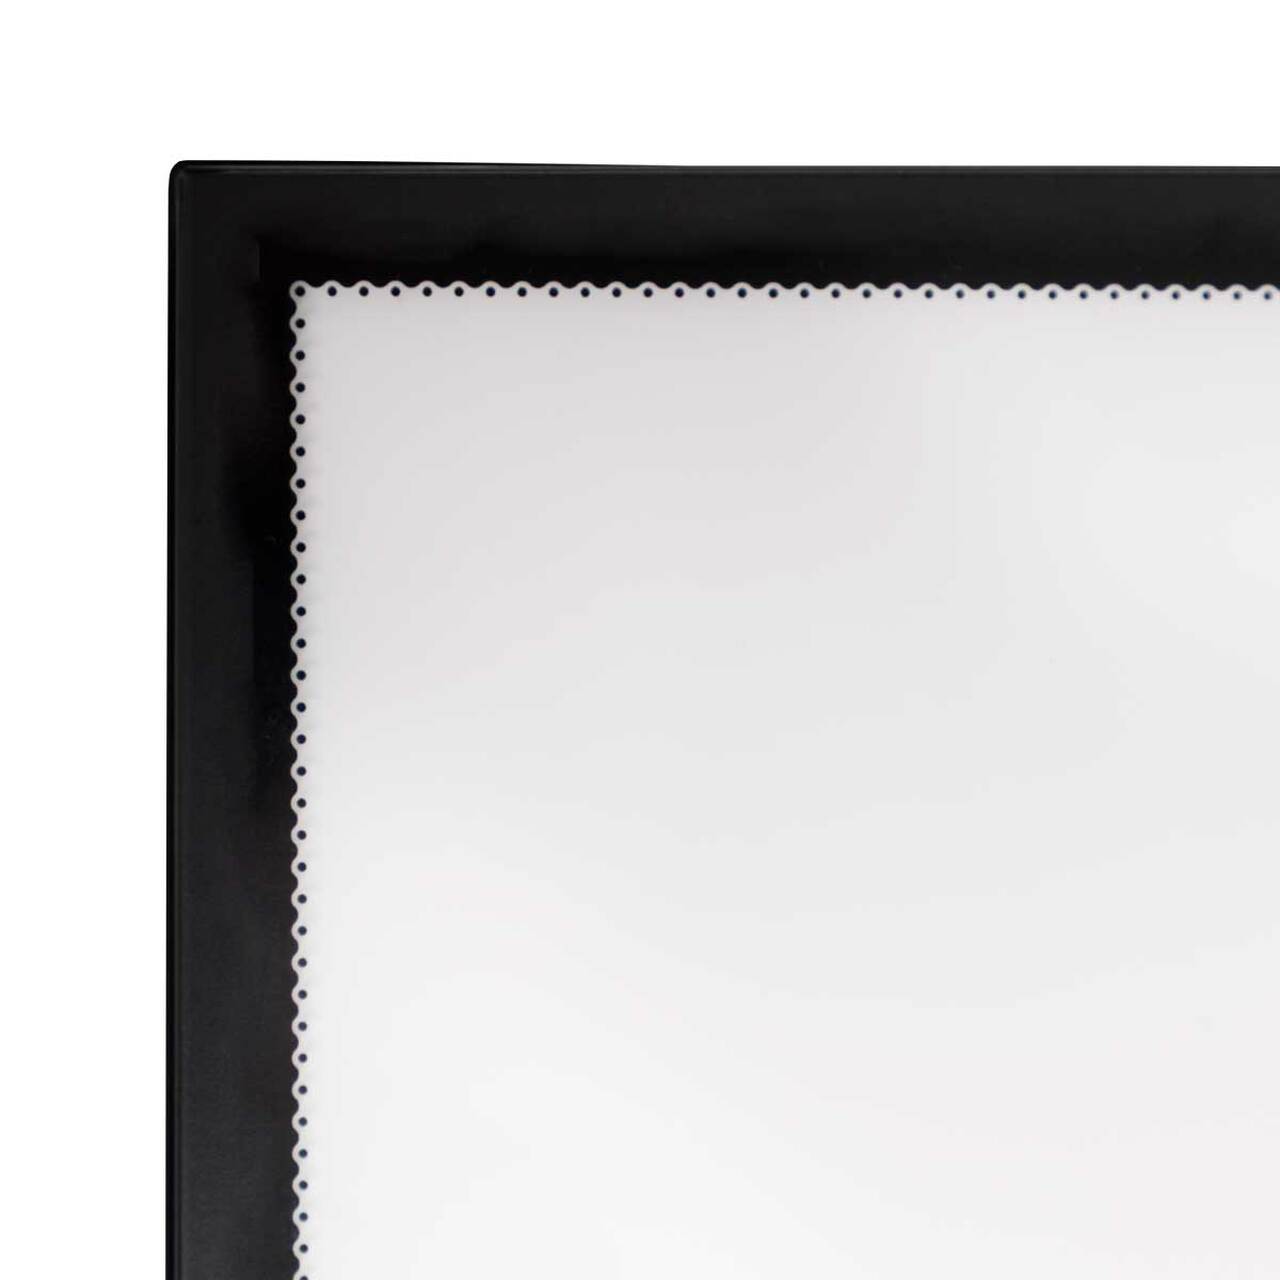 Caseta luminoasa ultra slim SLIDE-IN cu led, pentru interior, simpla fata, neagra, format print A3